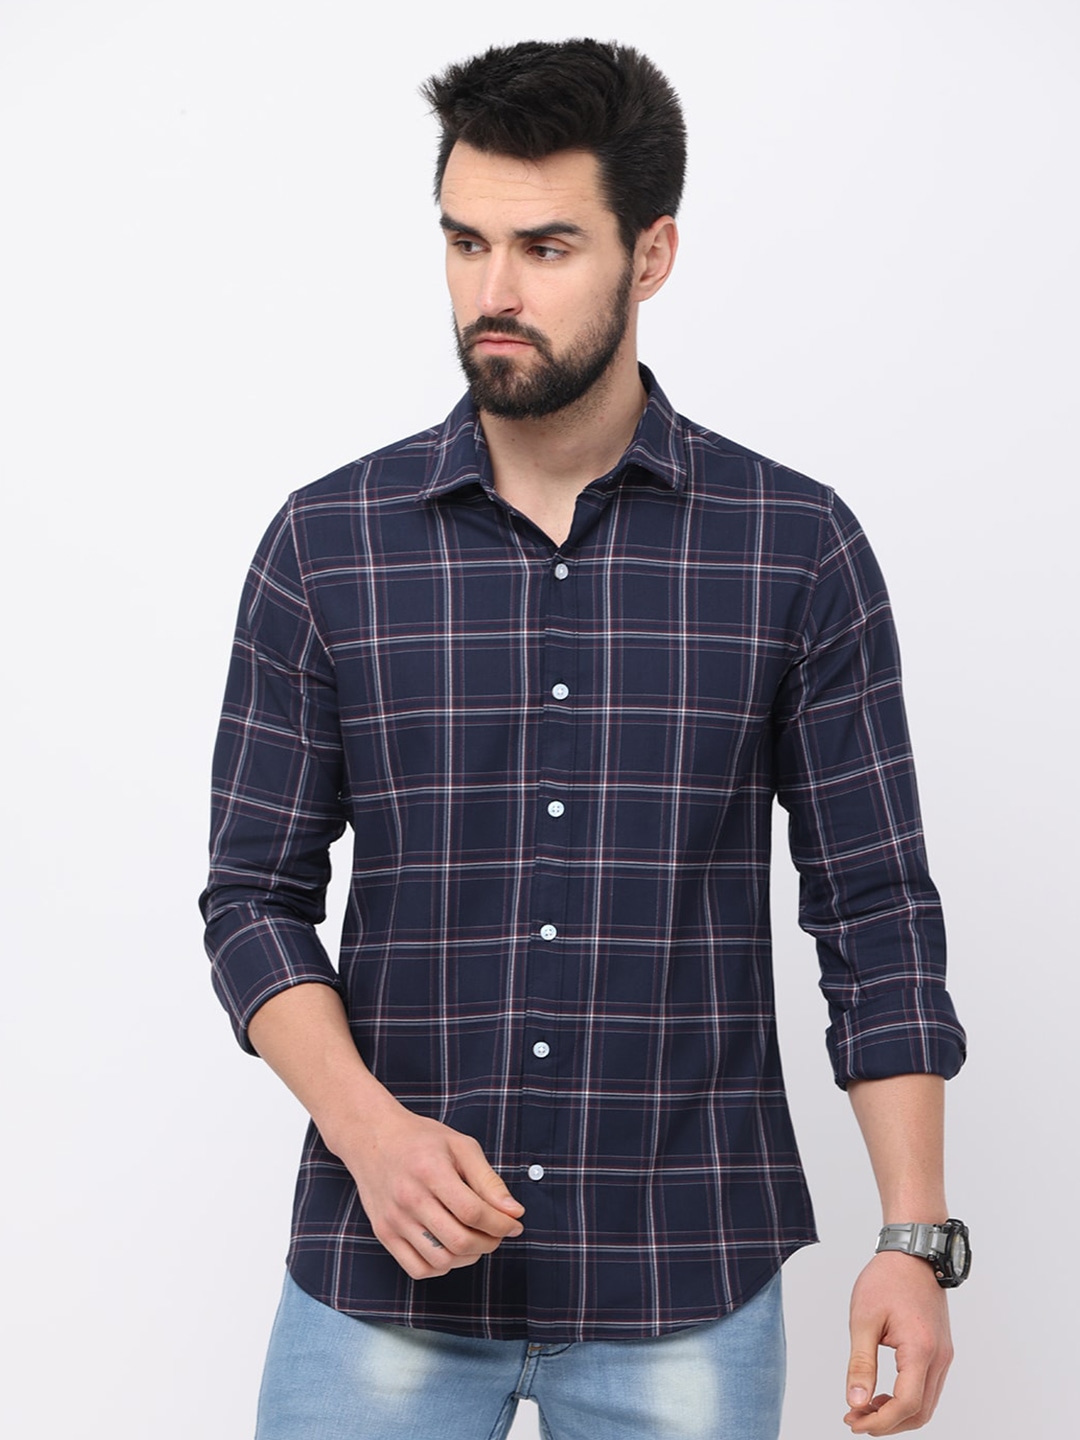 

FLY 69 Premium Slim Fit Windowpane Checks Opaque Pure Cotton Casual Shirt, Navy blue